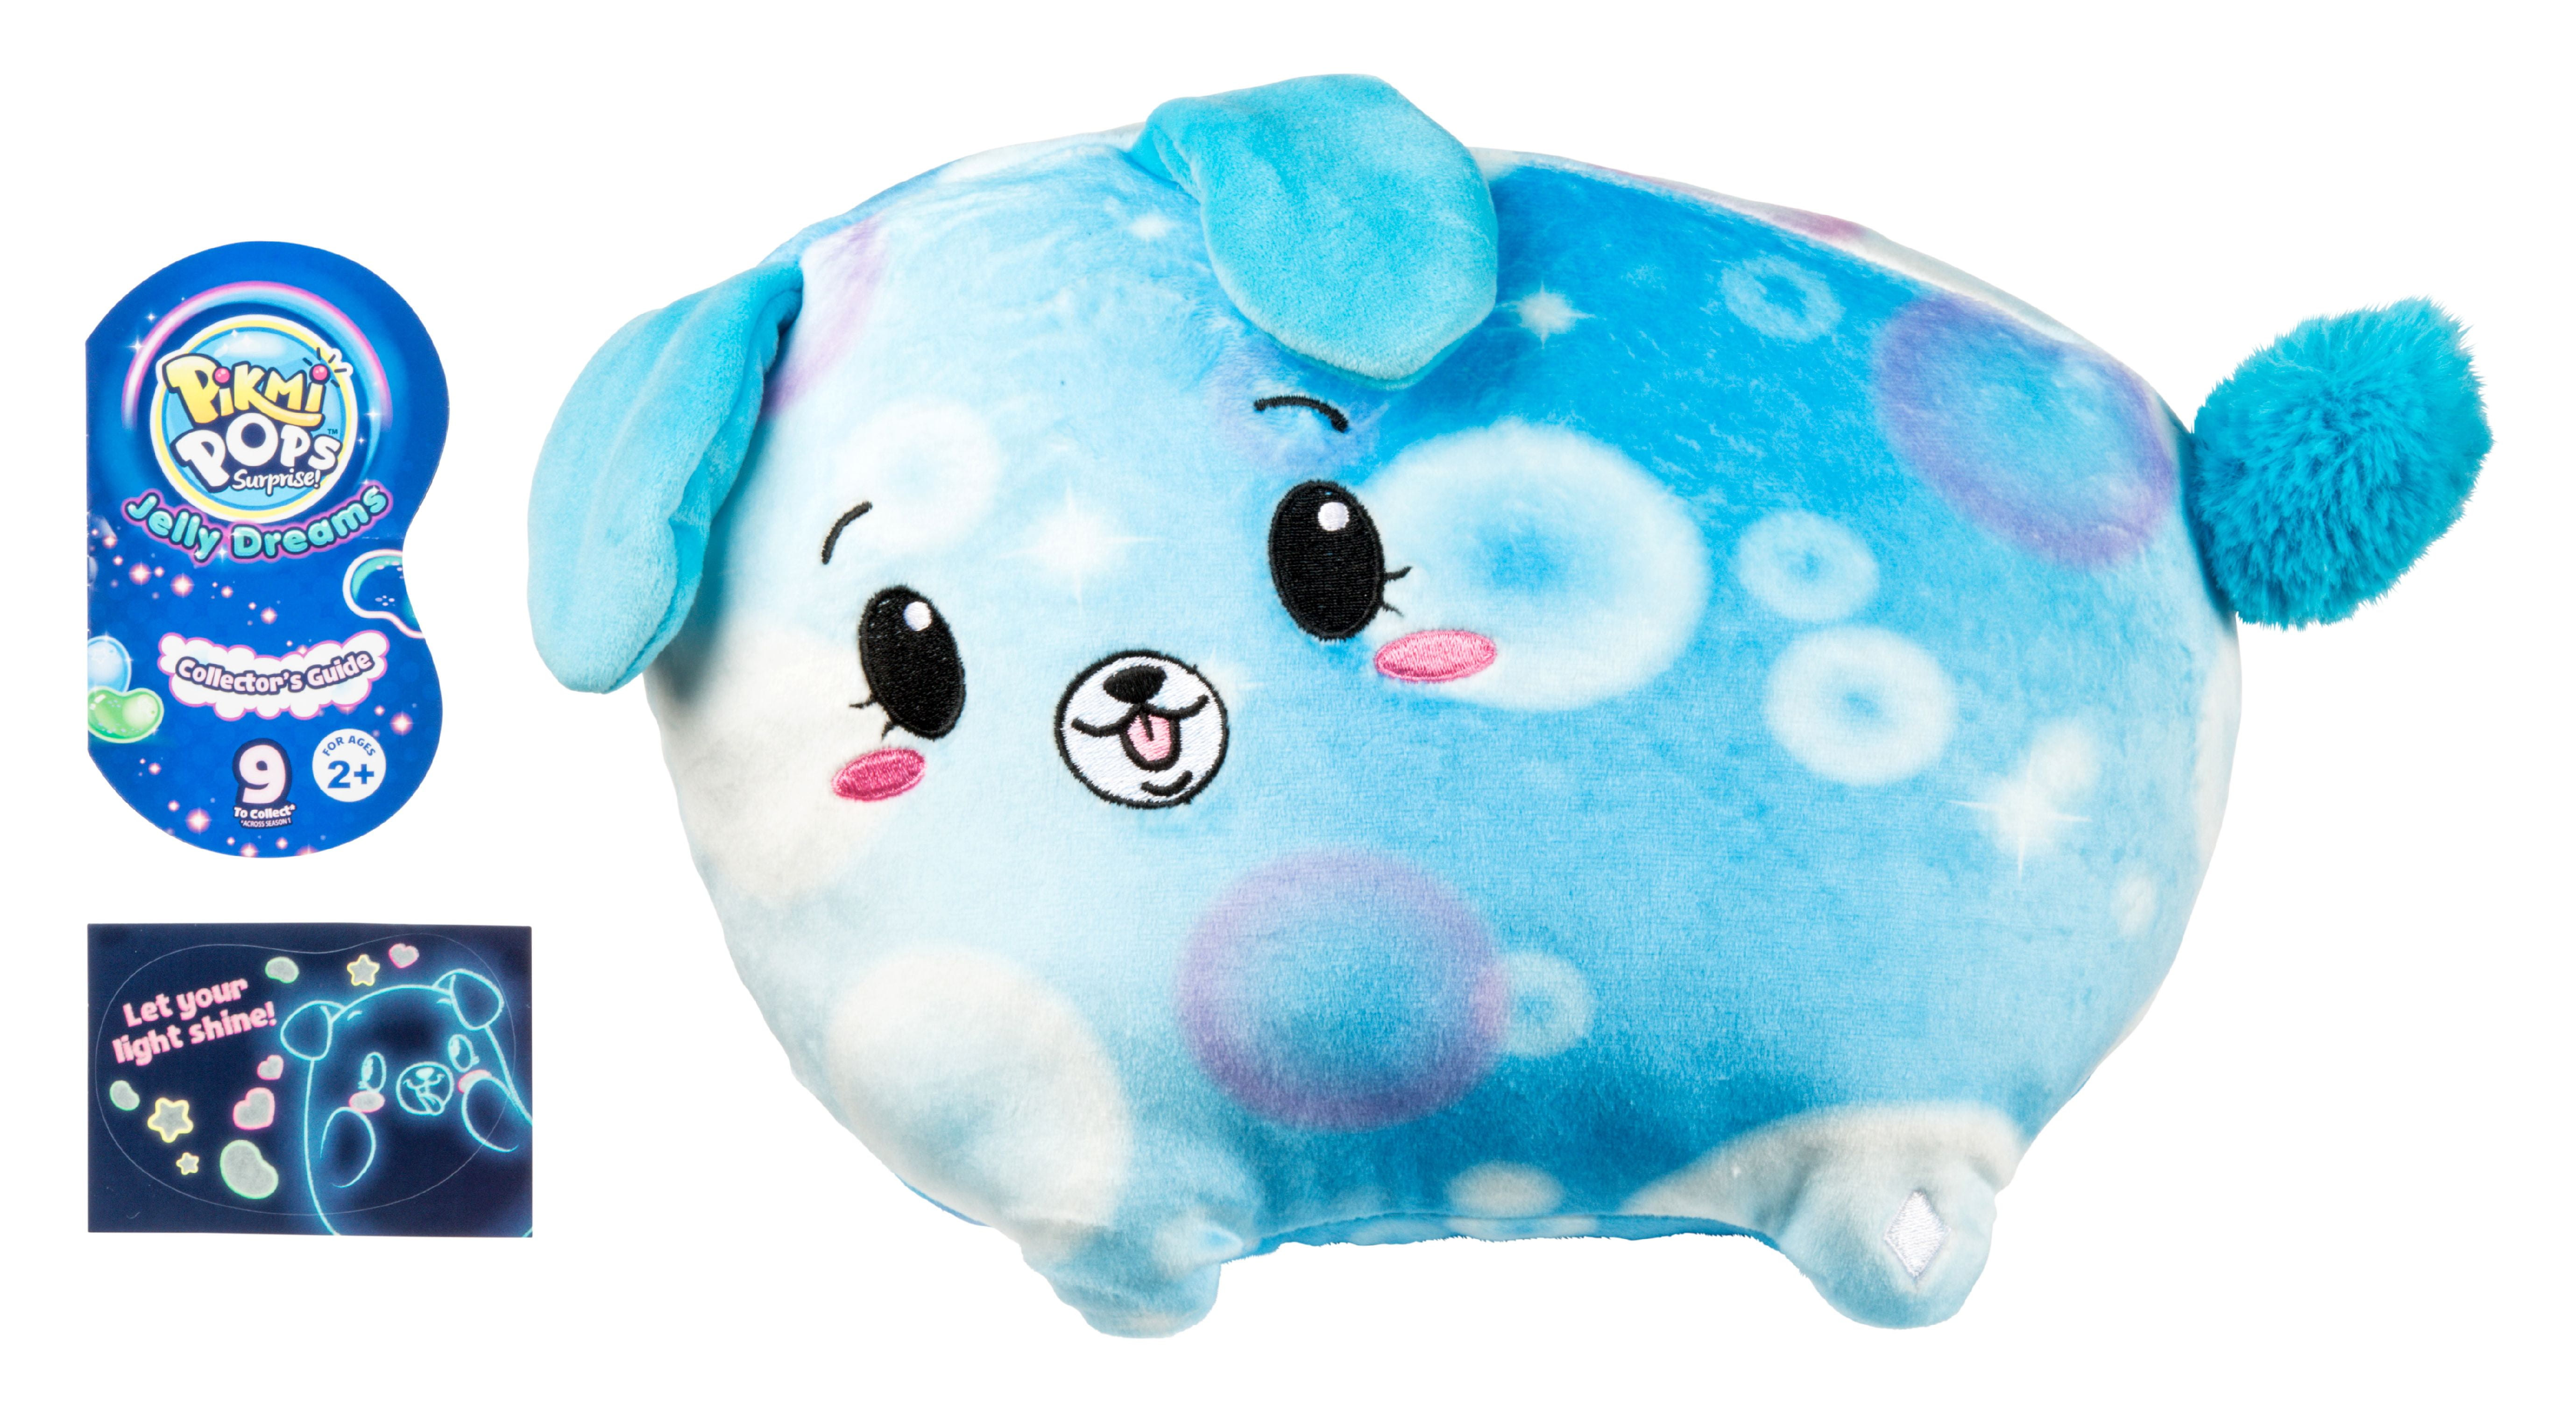 Pikmi Pops Surprise Jumbo Plush Animal Soft Plush Toy Bear 